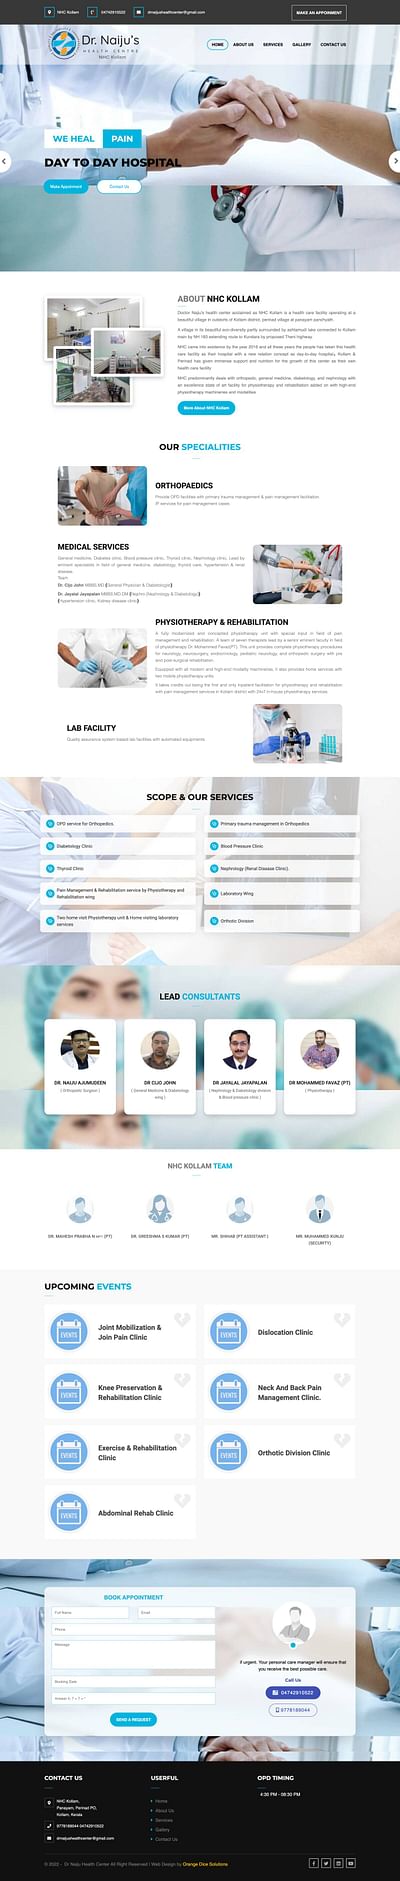 Website developed for NHC hospital Kollam - Publicité en ligne